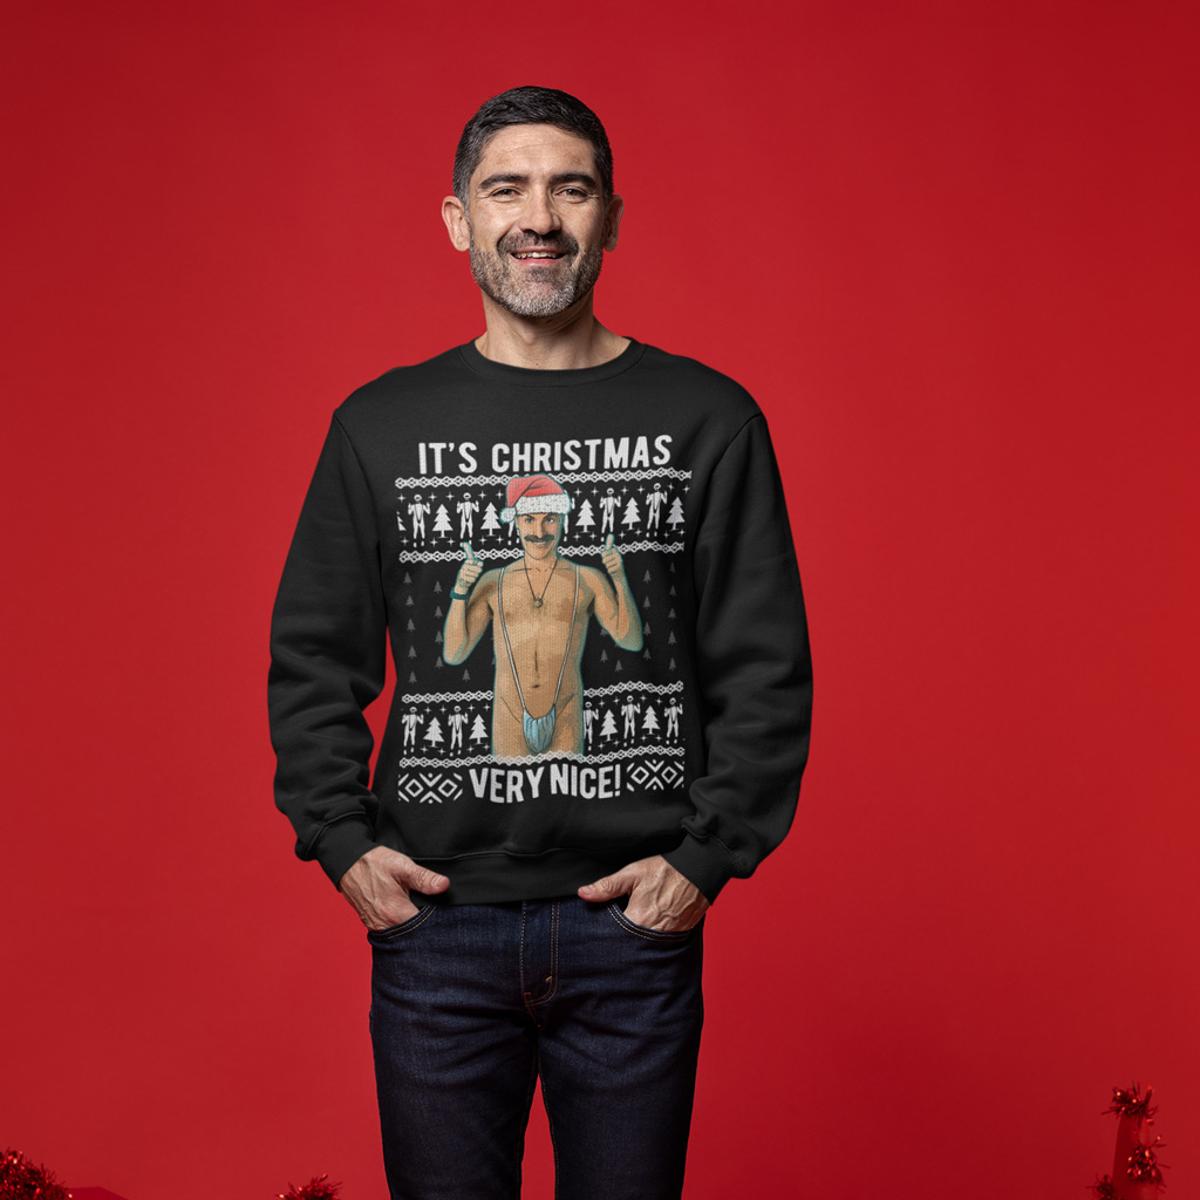 Borat Funny Christmas Sweater